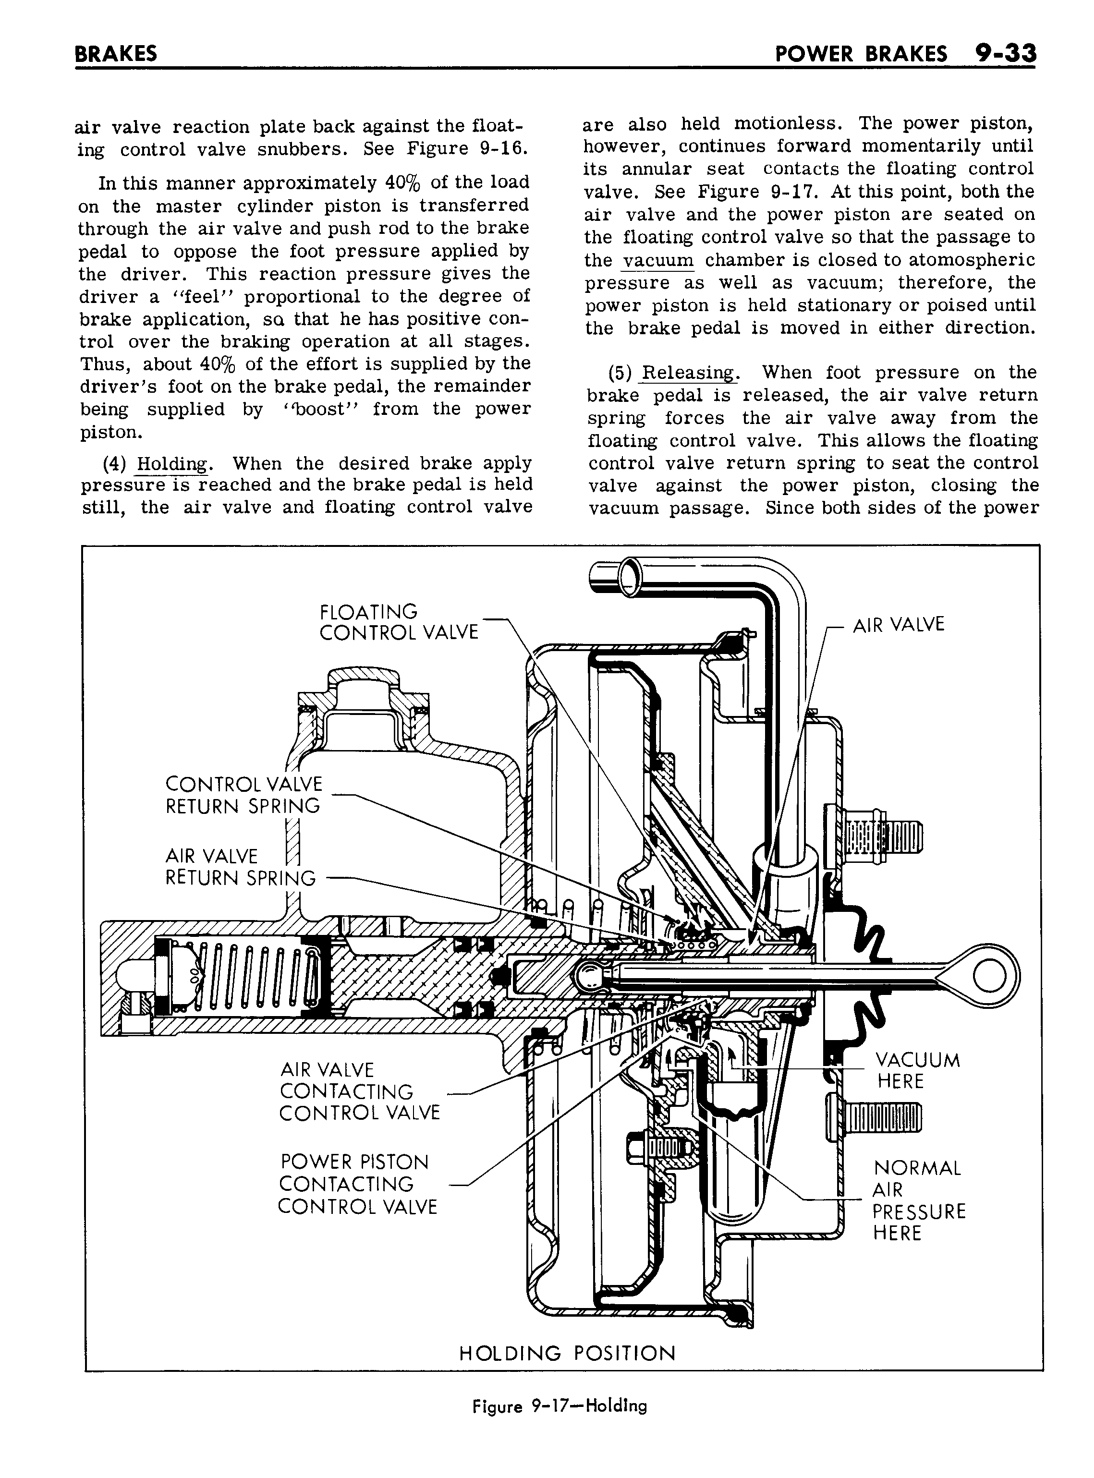 n_09 1961 Buick Shop Manual - Brakes-033-033.jpg